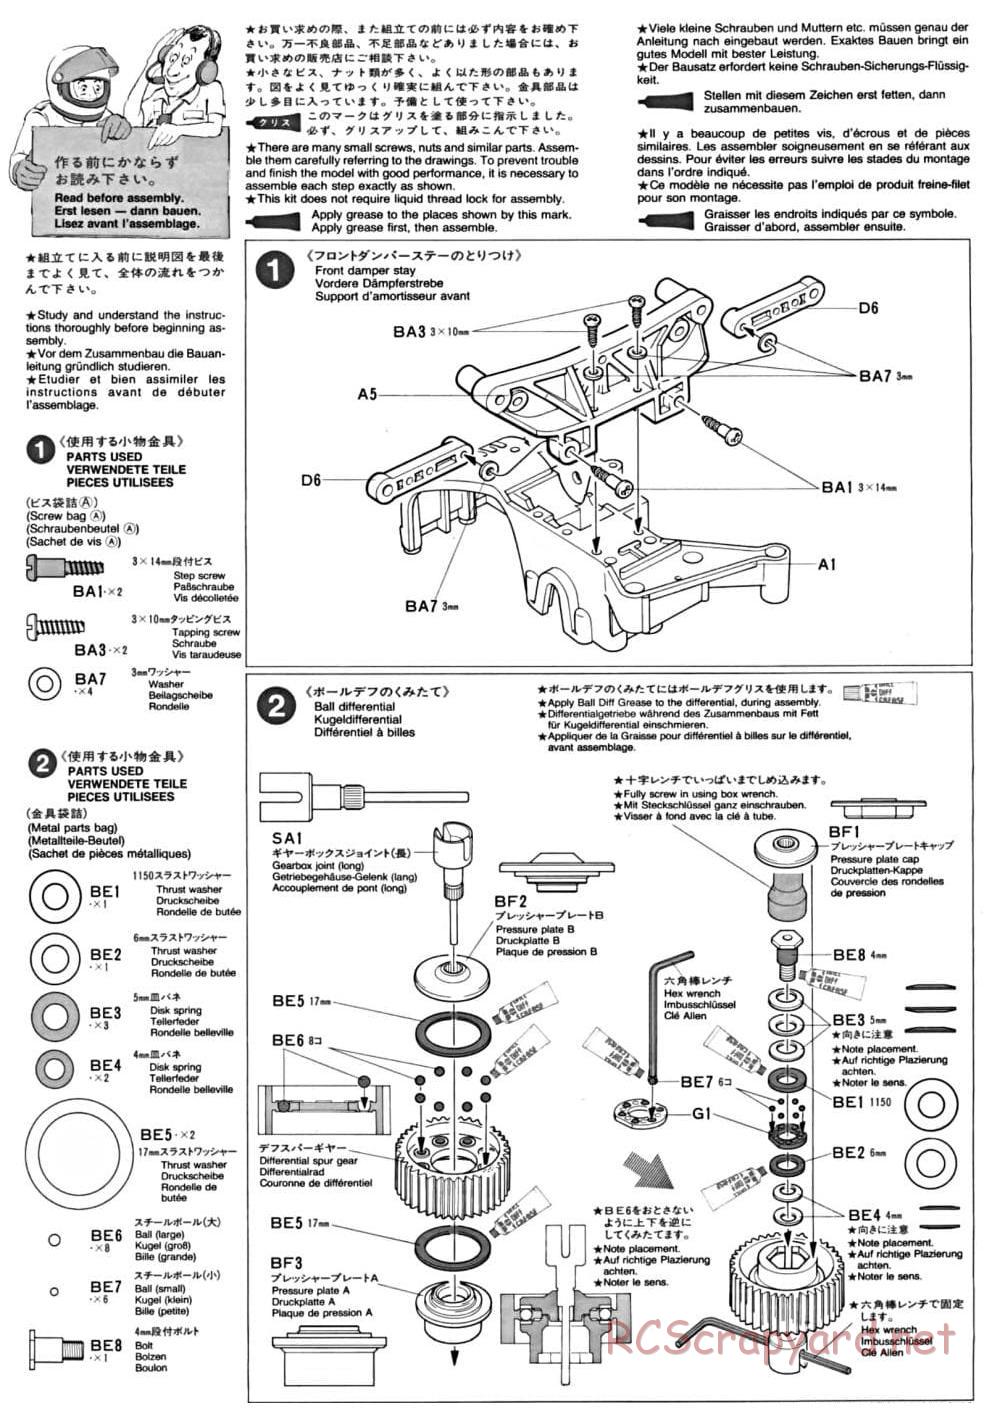 Tamiya - FF-01 Chassis - Manual - Page 4